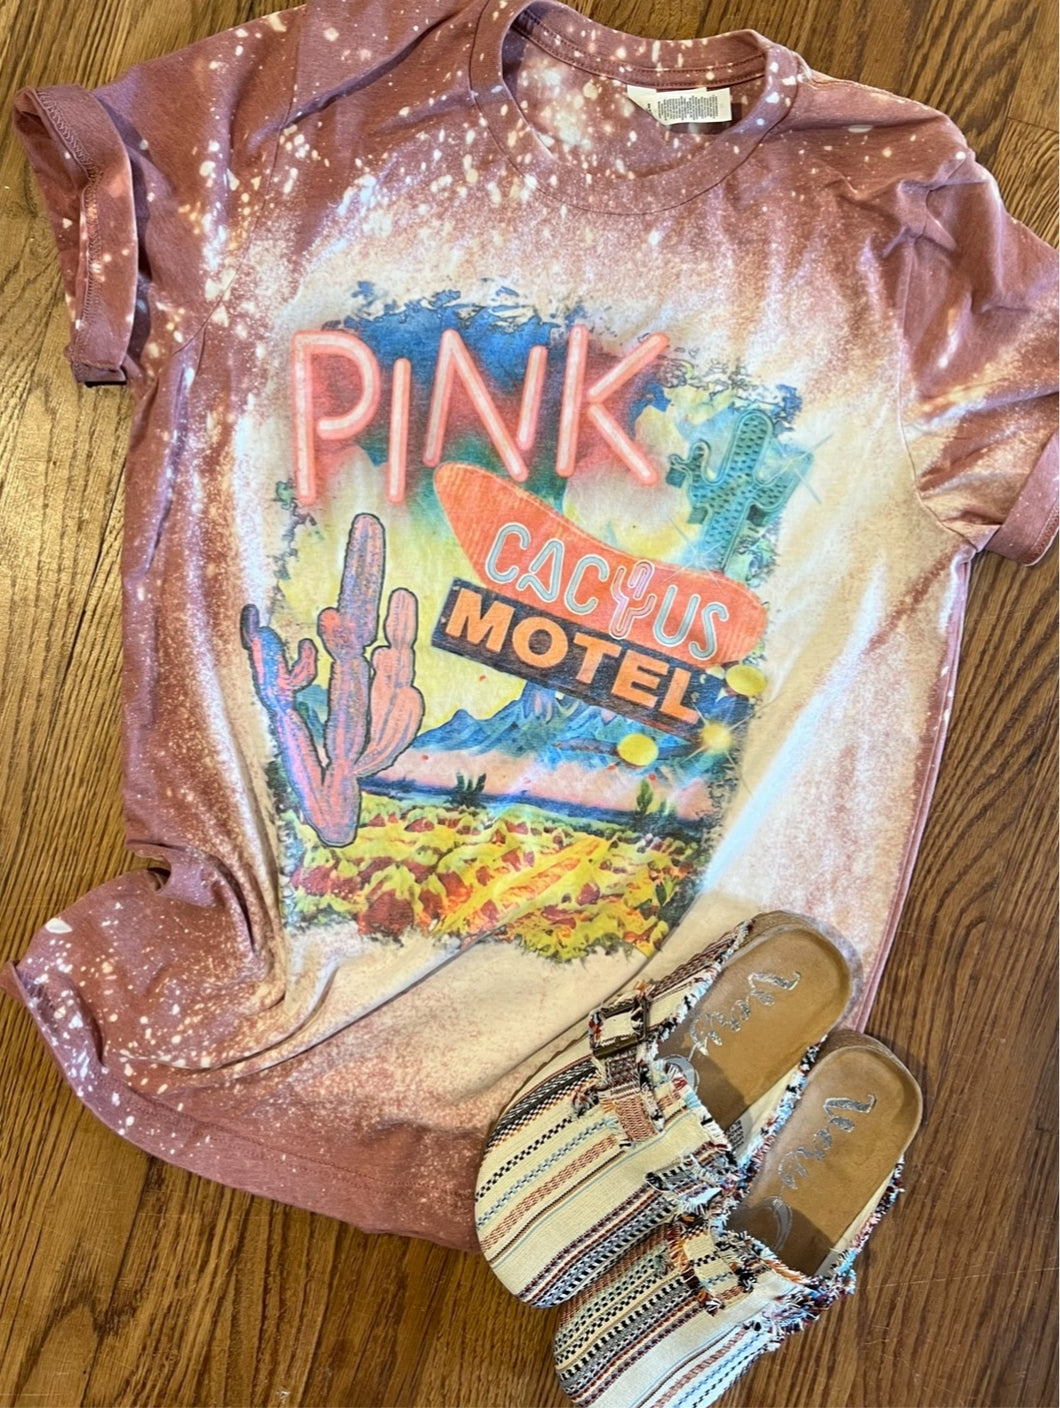 Pink cactus motel graphic tee - Mavictoria Designs Hot Press Express